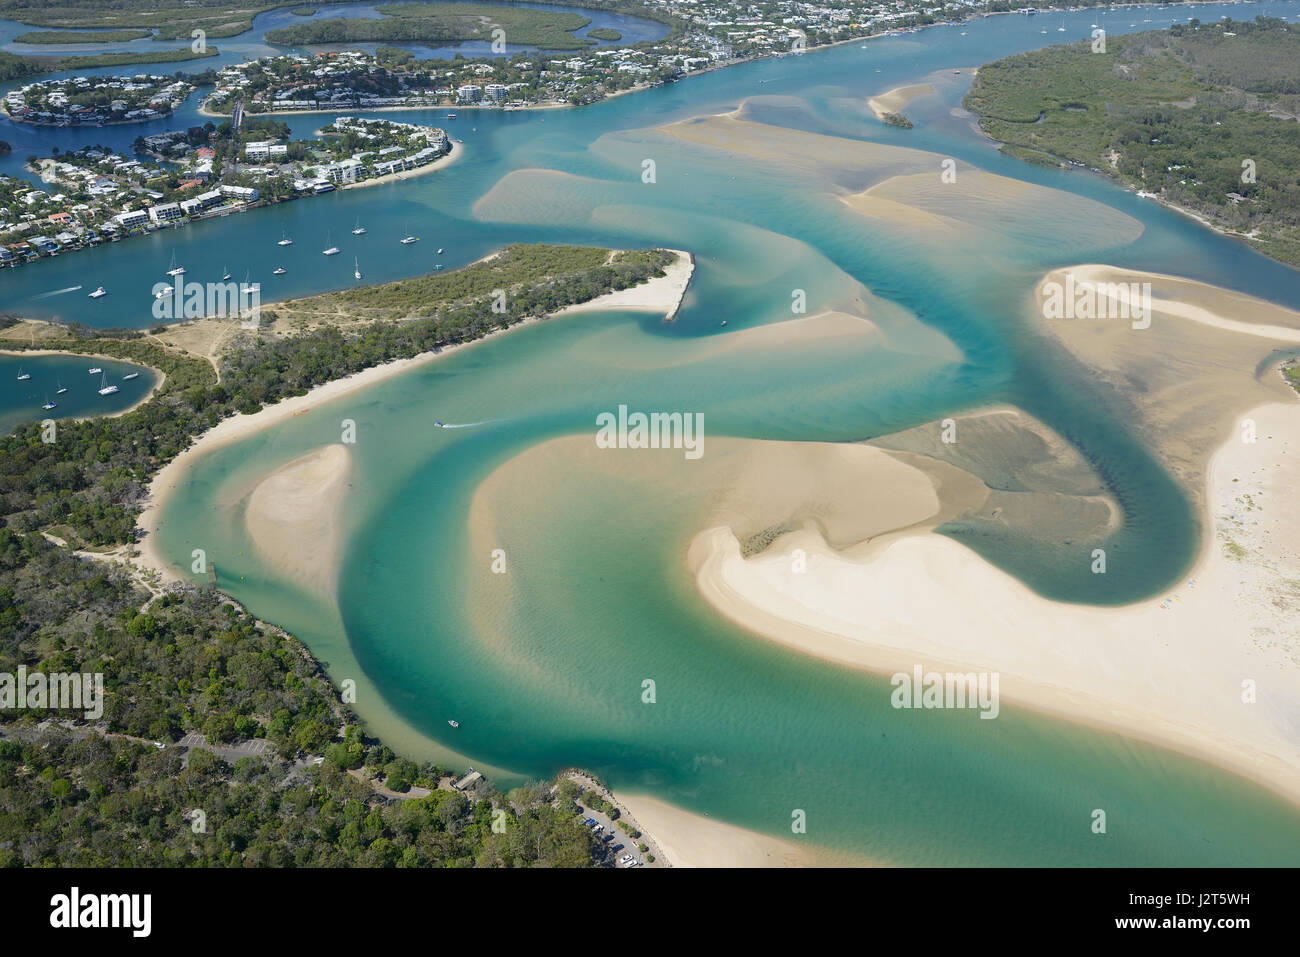 AERIAL VIEW. Seaside resort near the mouth of a colorful estuary. Noosa Heads, Sunshine Coast, Queensland, Australia. Stock Photo